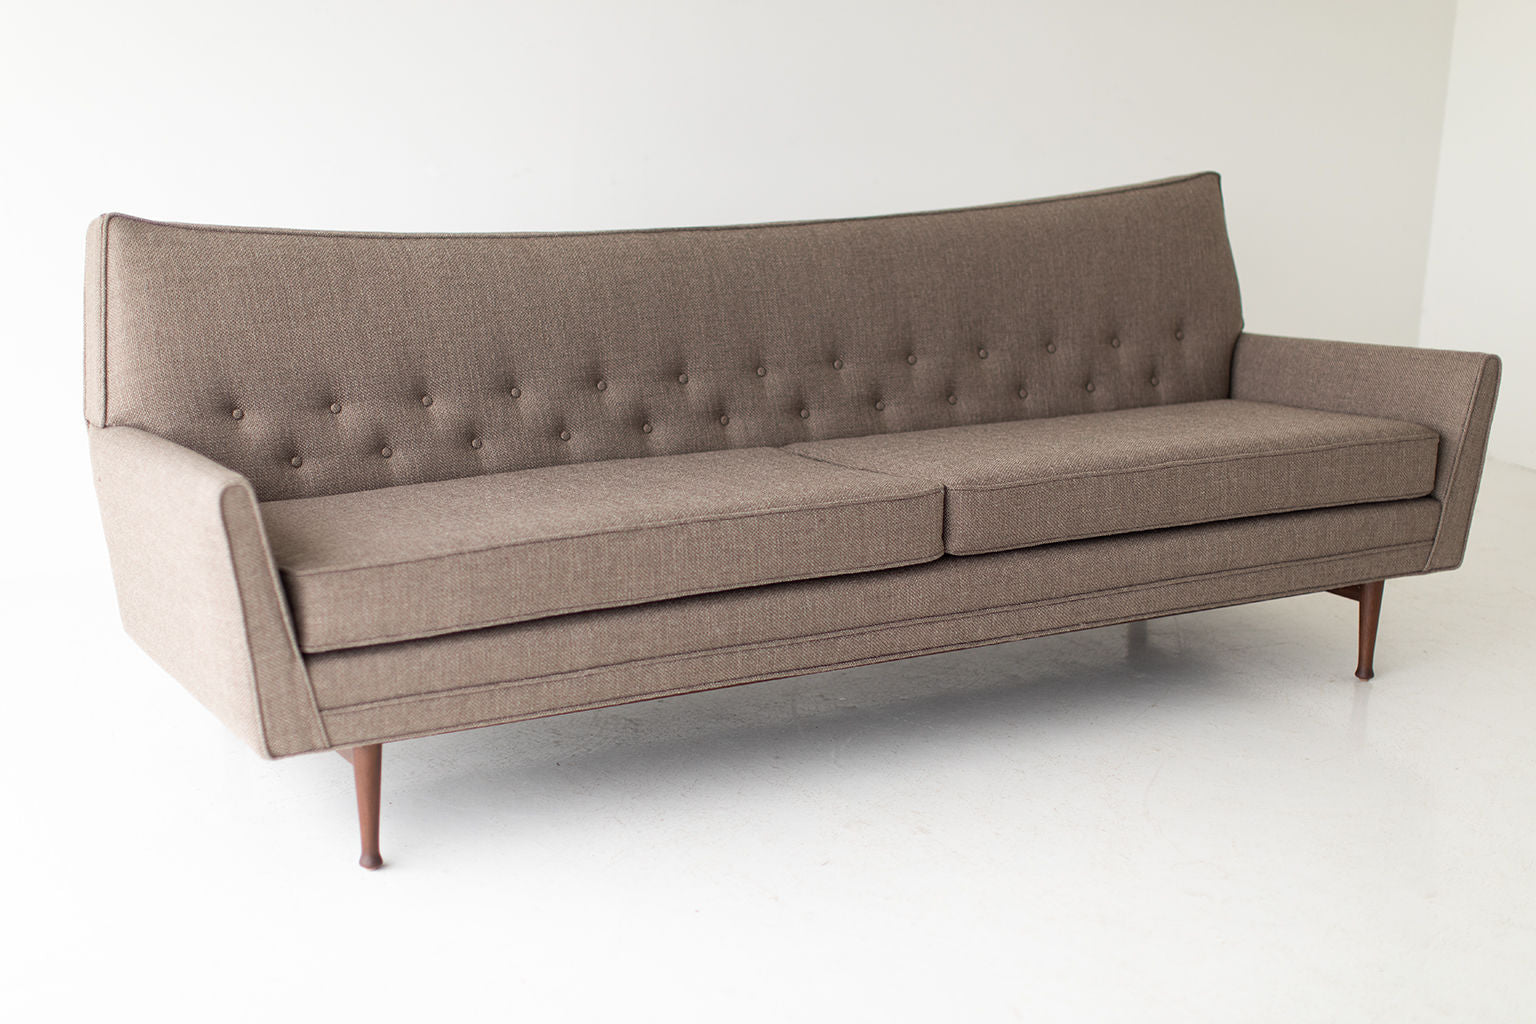 Lawrence Peabody Modern Sofa For Craft Associates Furniture - 1908P